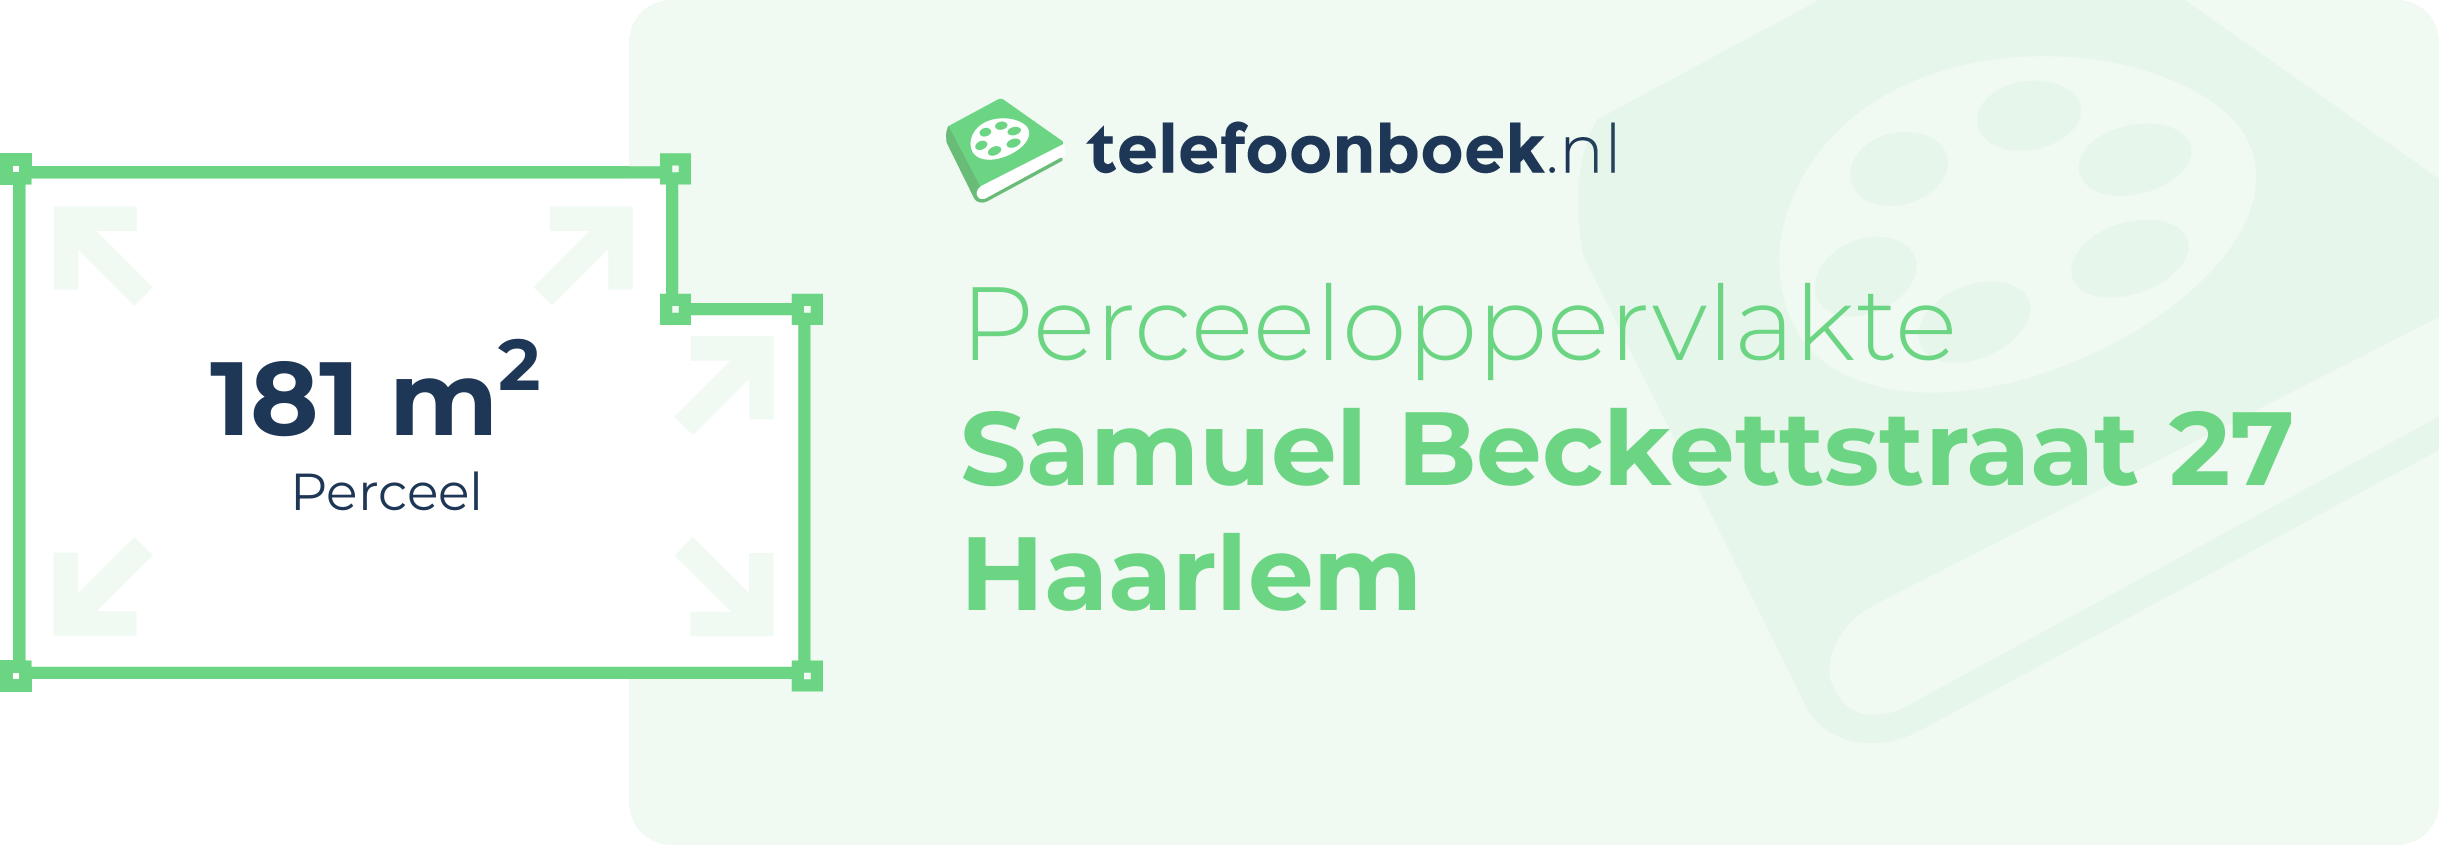 Perceeloppervlakte Samuel Beckettstraat 27 Haarlem